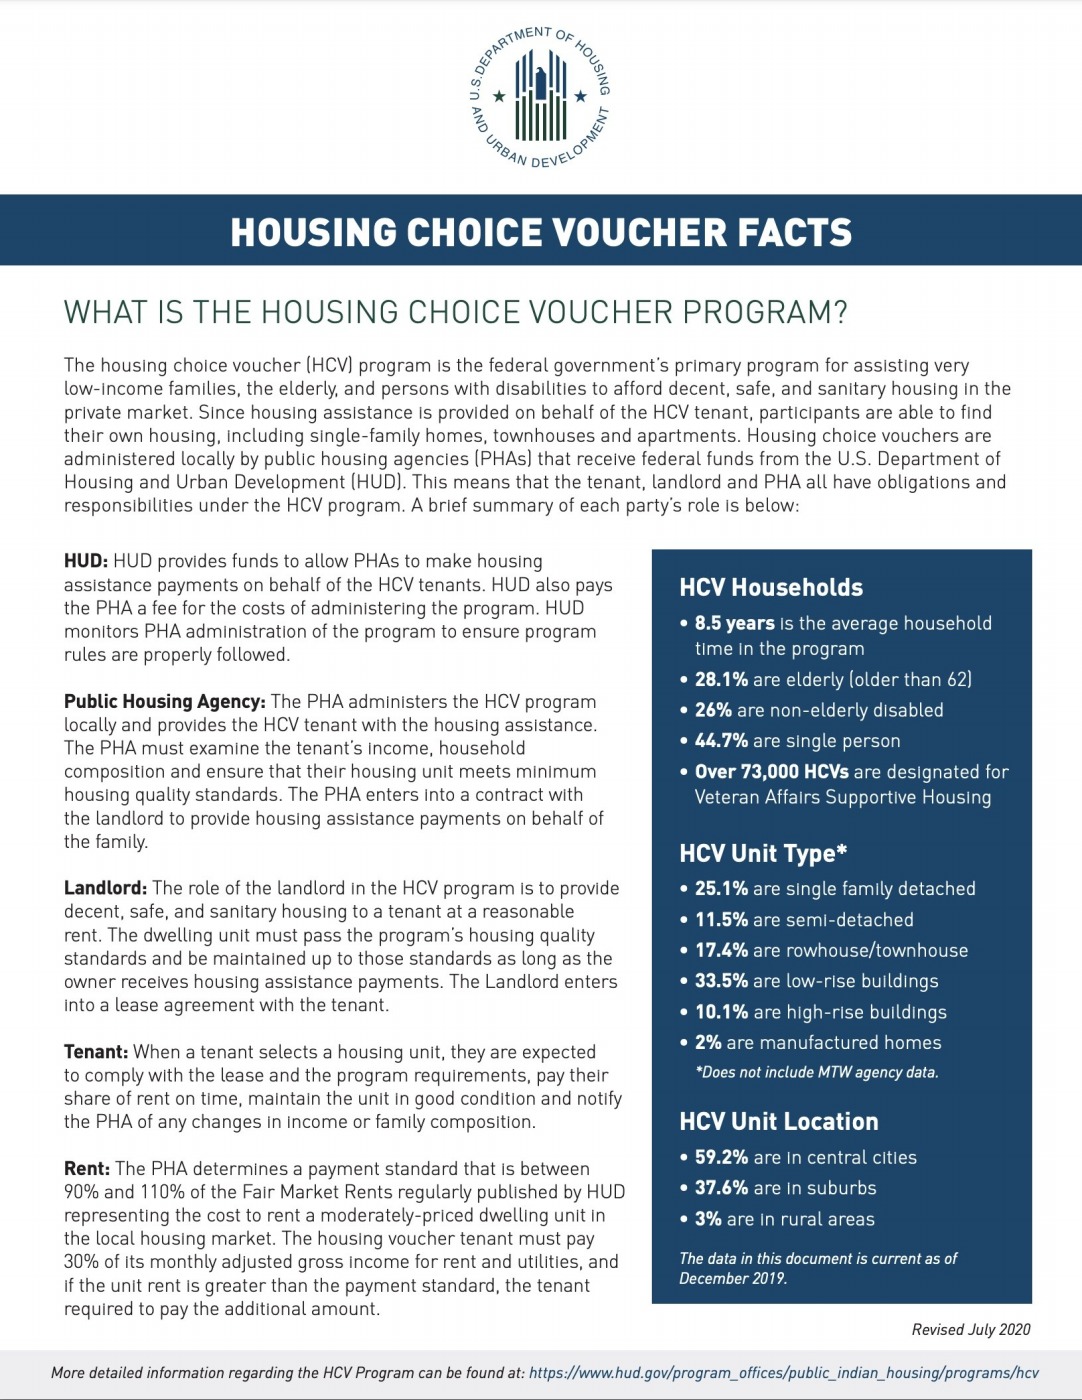 What is the Housing Choice Voucher (HCV) Program?